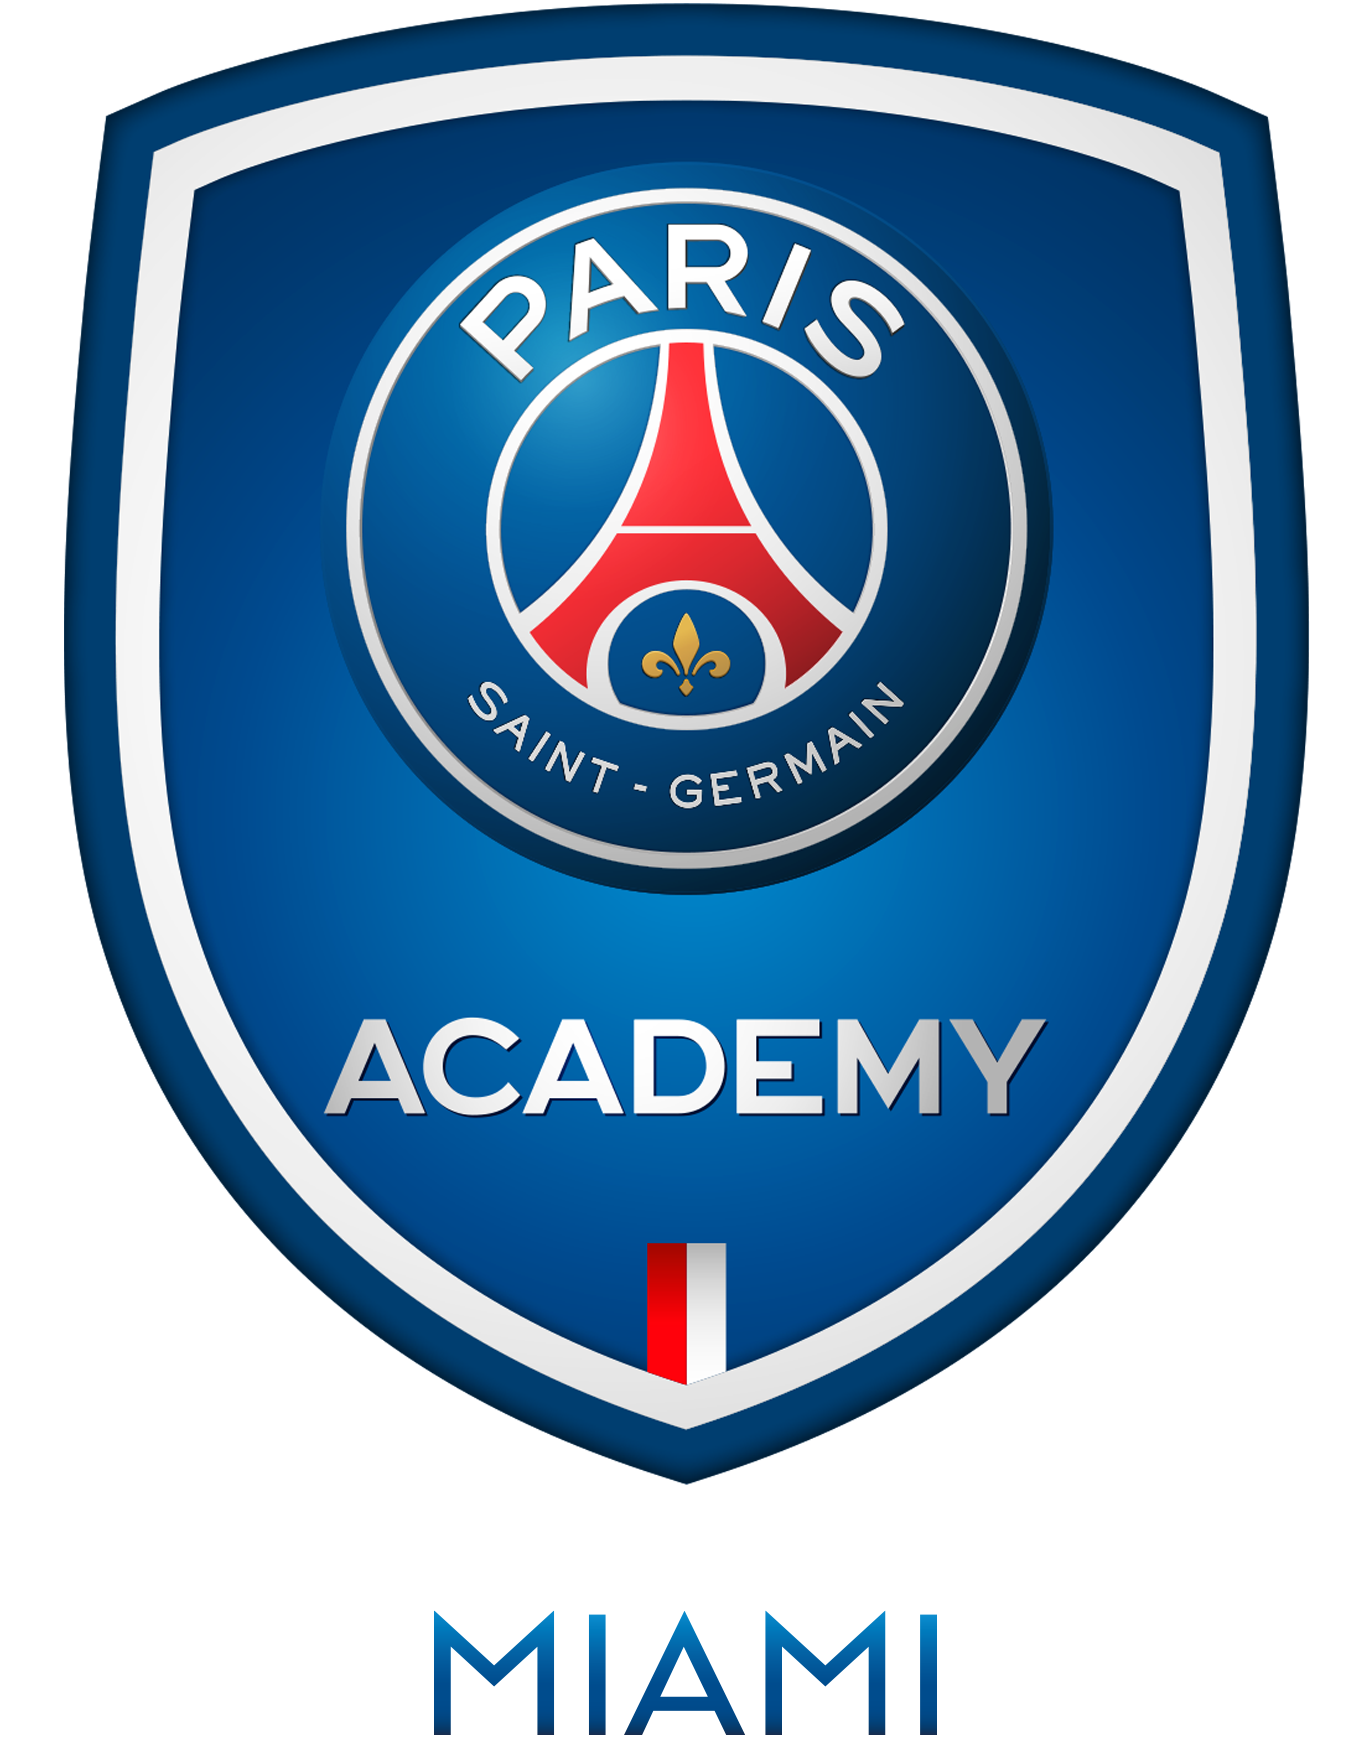 Paris Saint-Germain Academy Miami Soccer Club